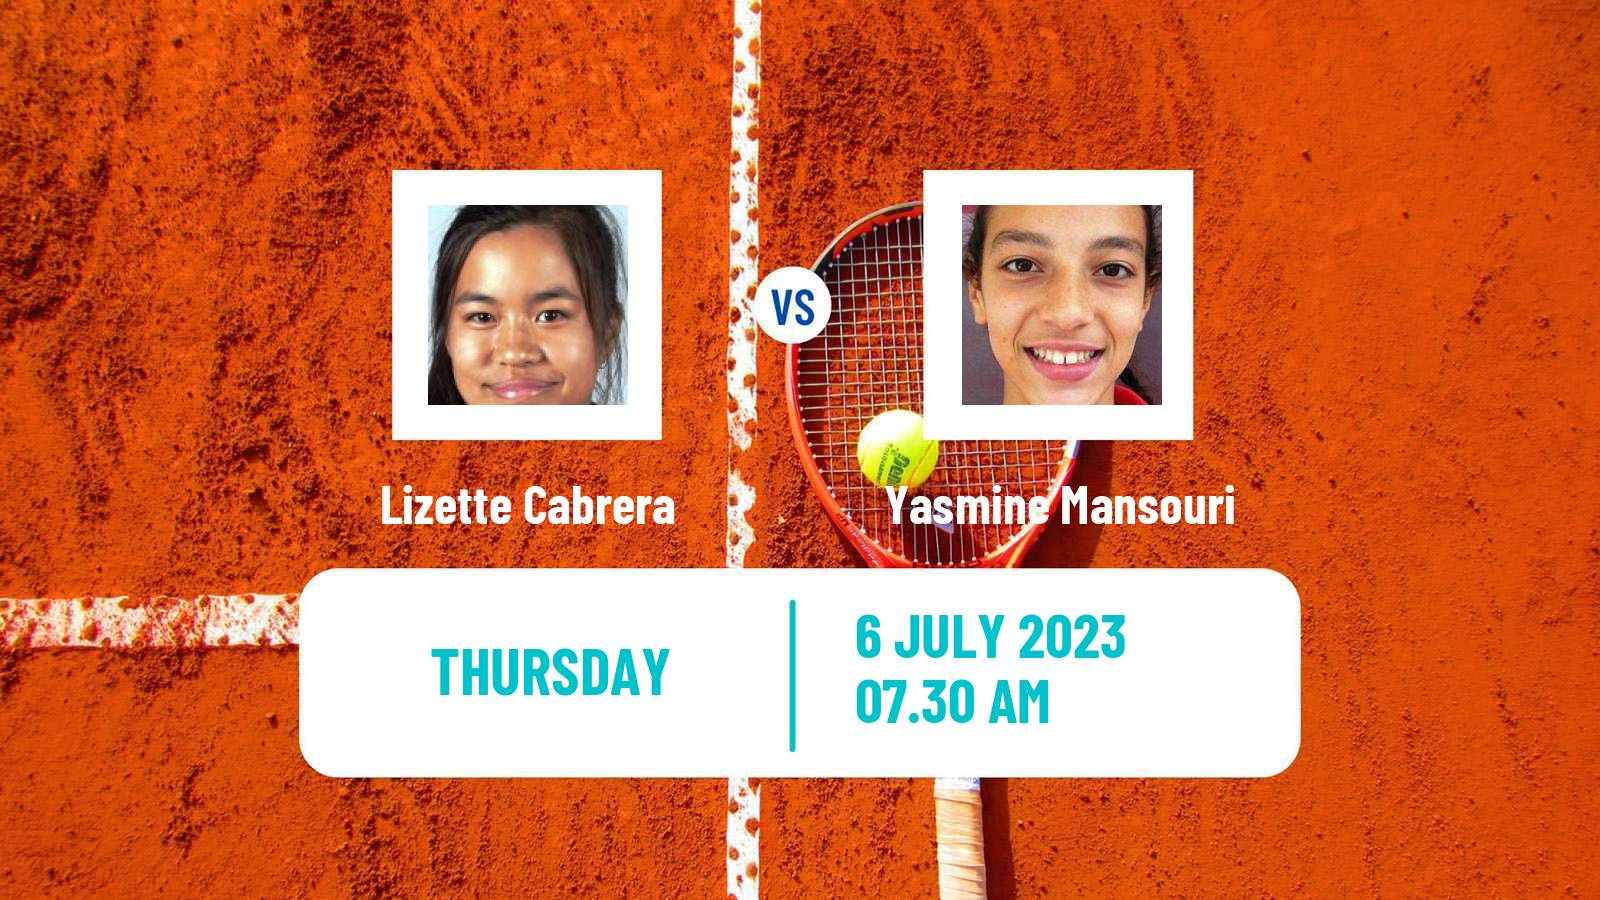 Tennis ITF W25 Cantanhede Women Lizette Cabrera - Yasmine Mansouri